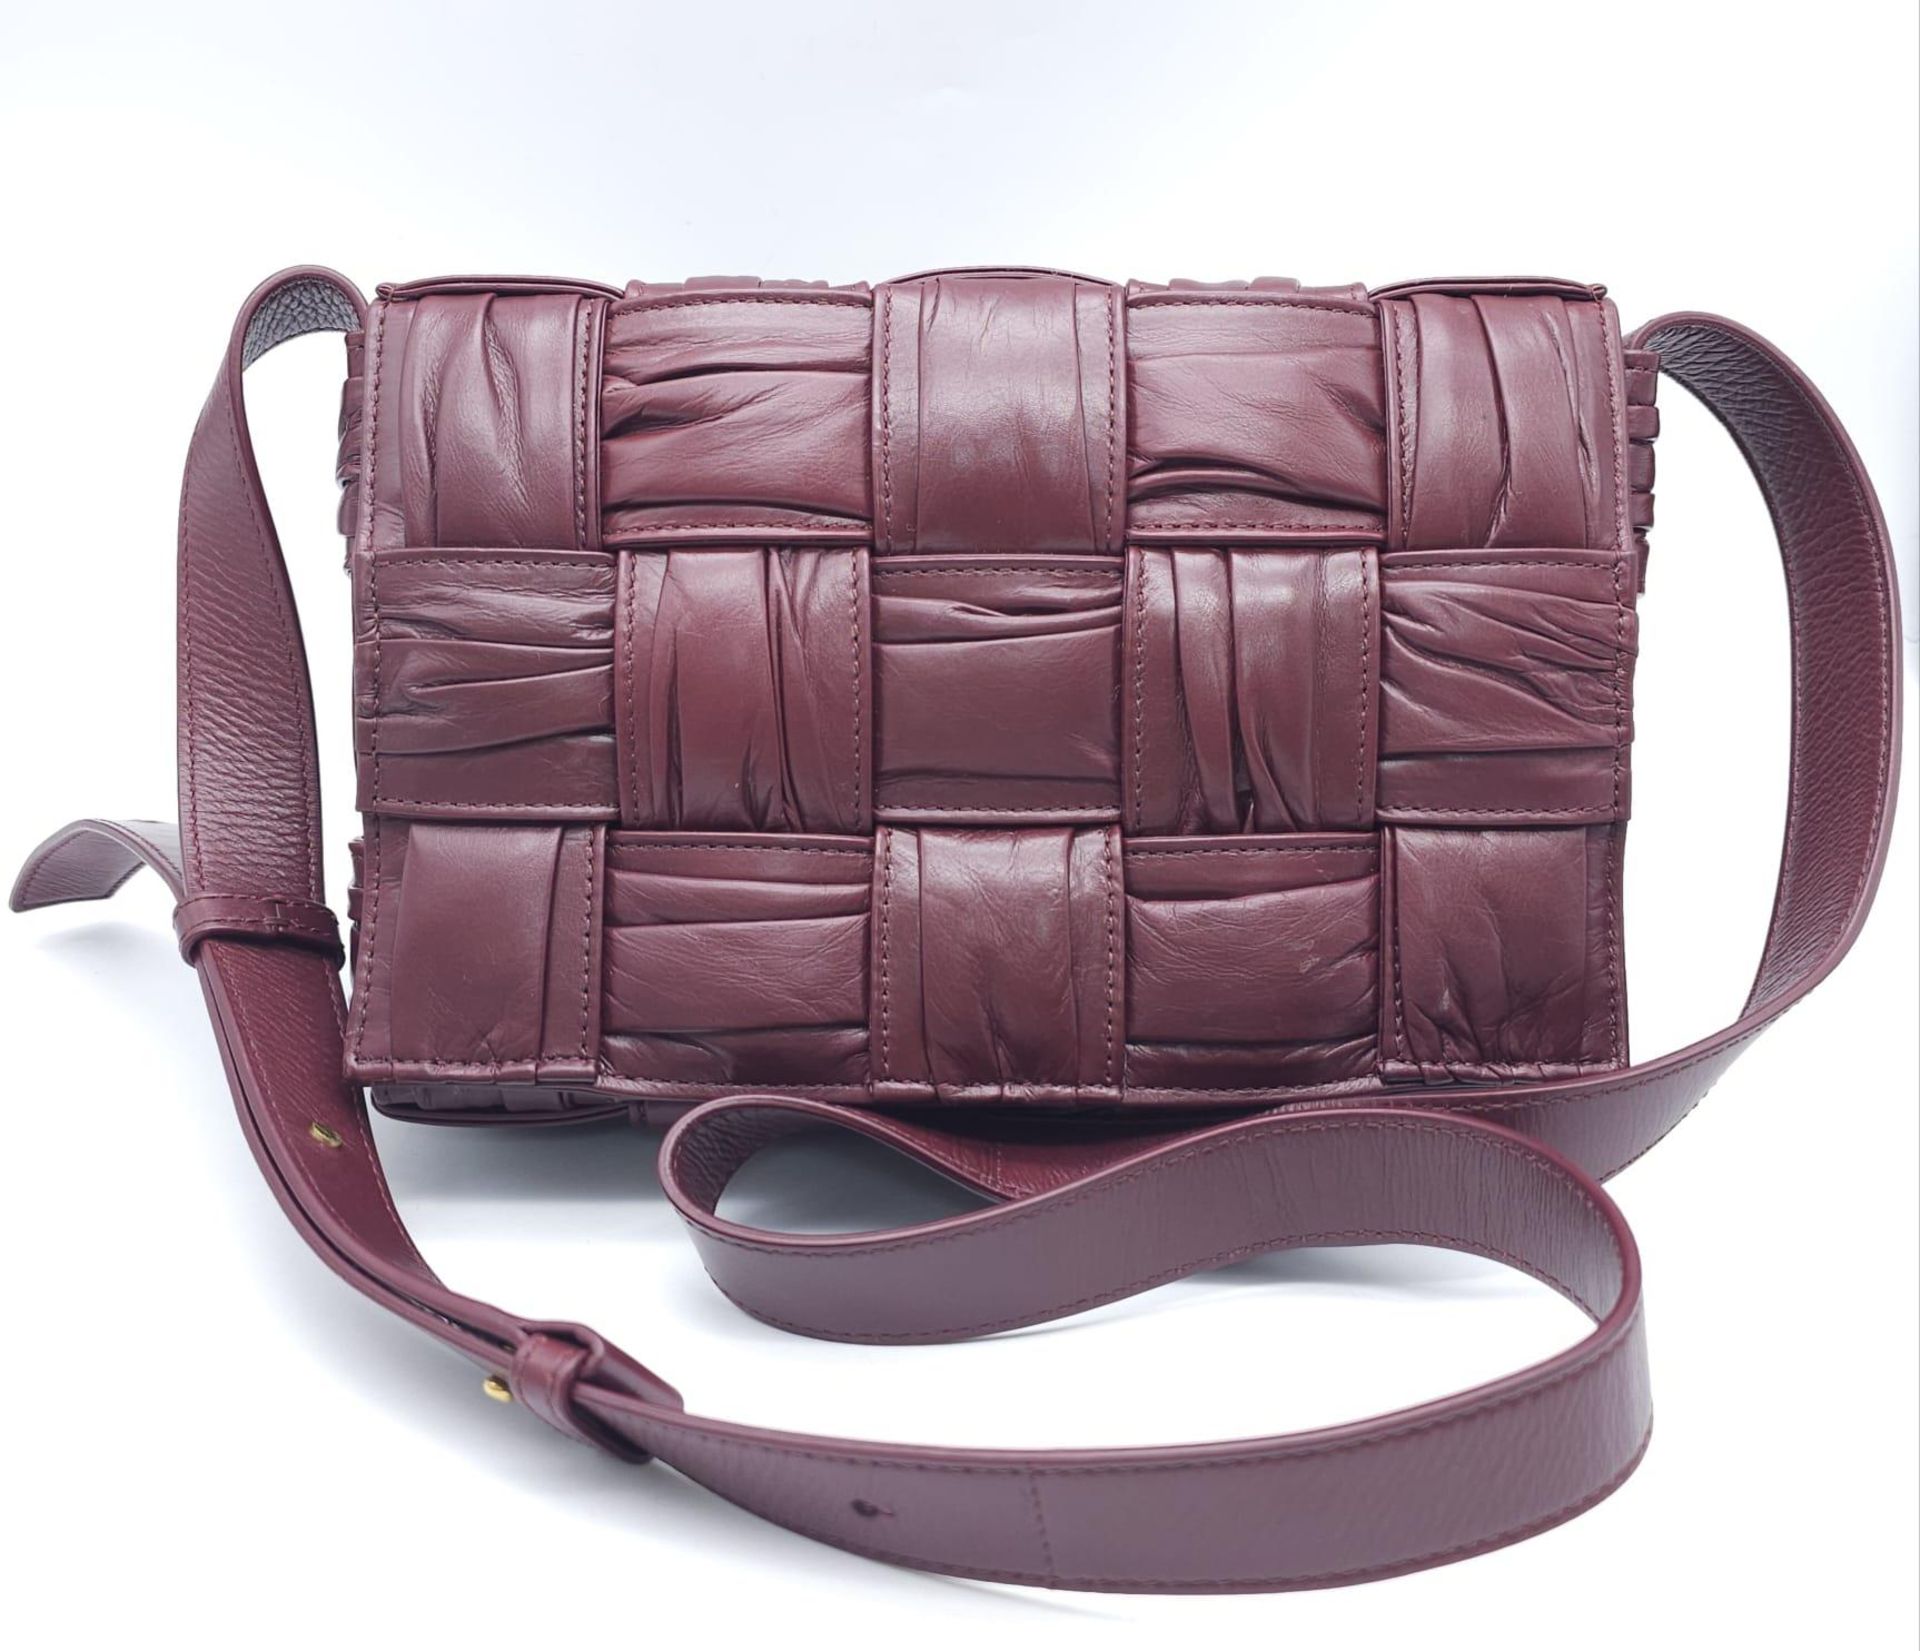 Bottega Veneta Brick Cassette Bag. Smooth burgundy leather, signature orthogonal weaving, adjustable - Image 2 of 12